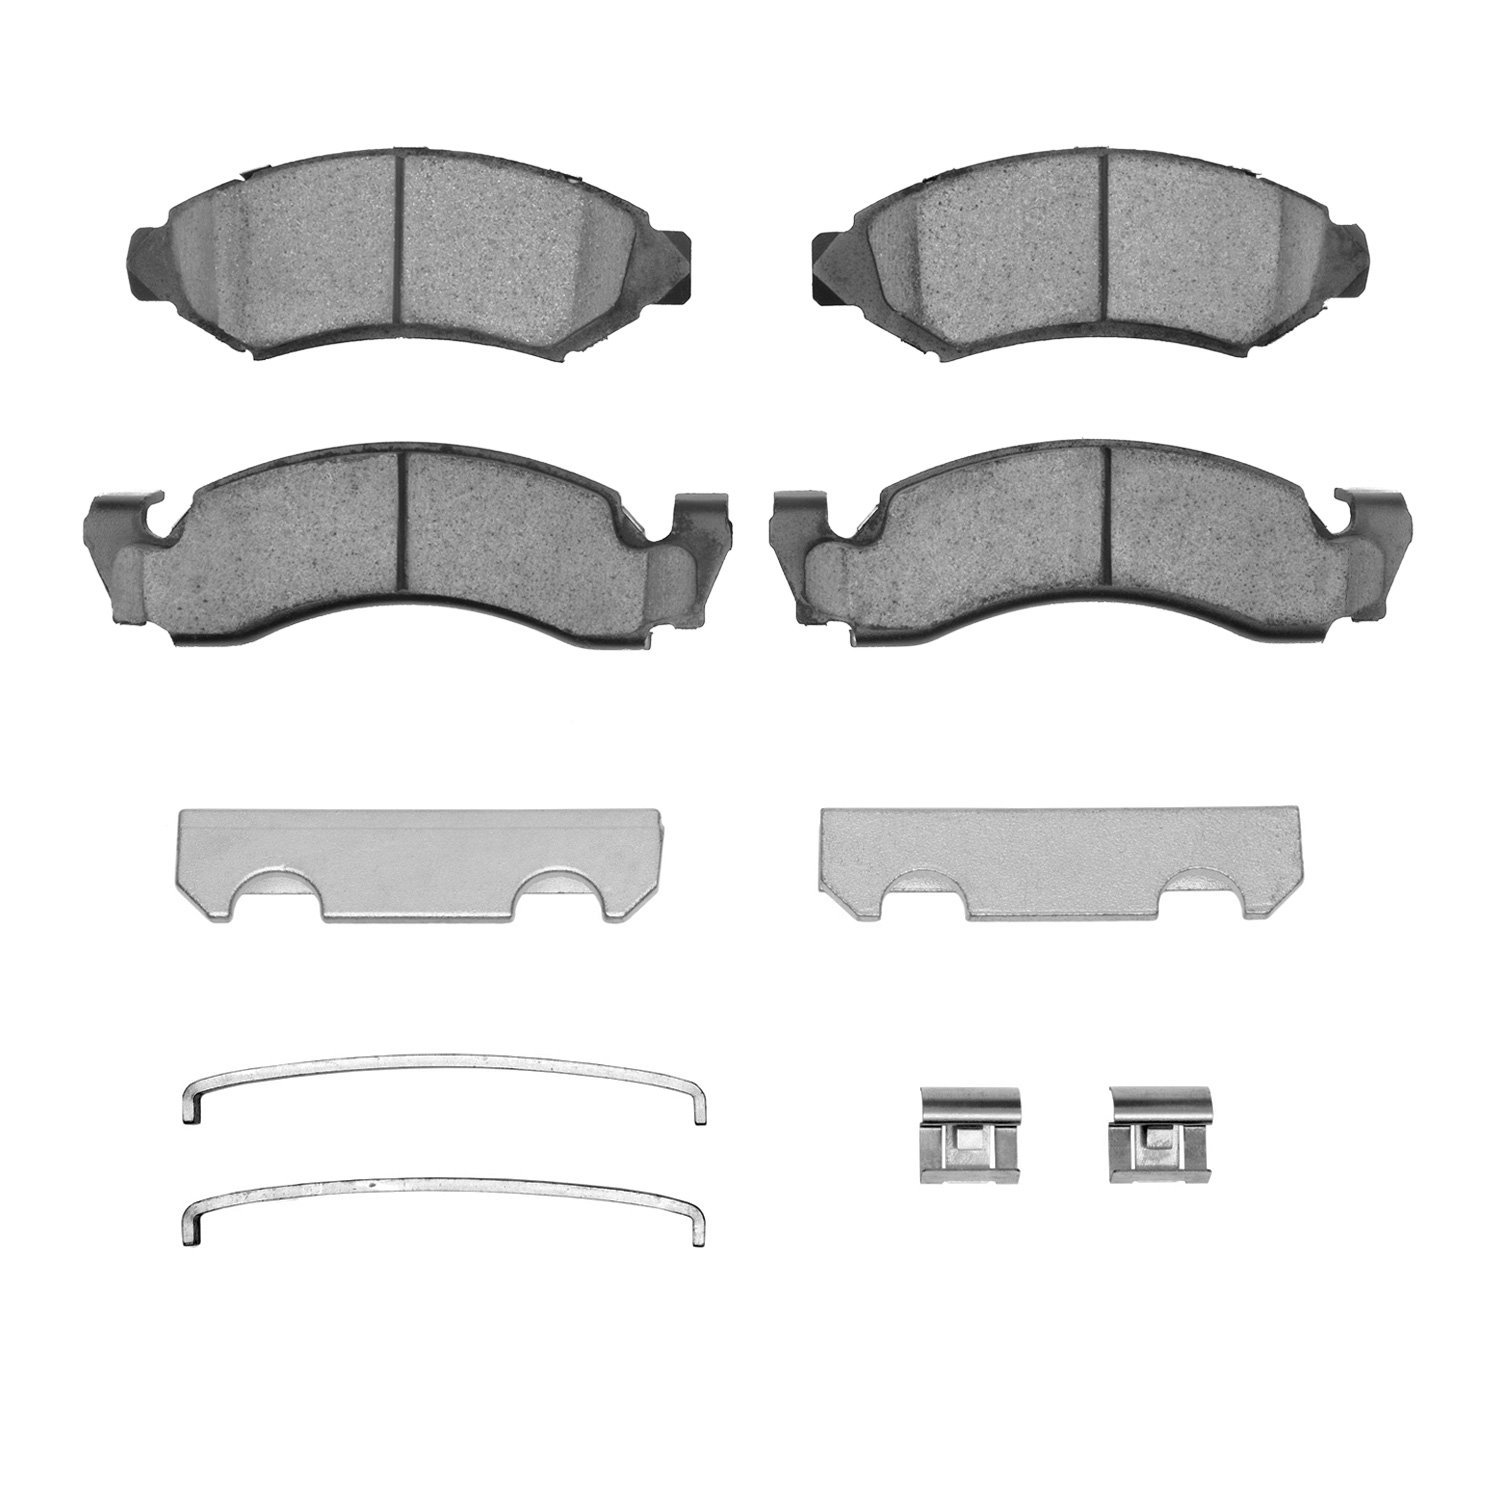 1214-0050-01 Heavy-Duty Brake Pads & Hardware Kit, 1973-1985 Multiple Makes/Models, Position: Front